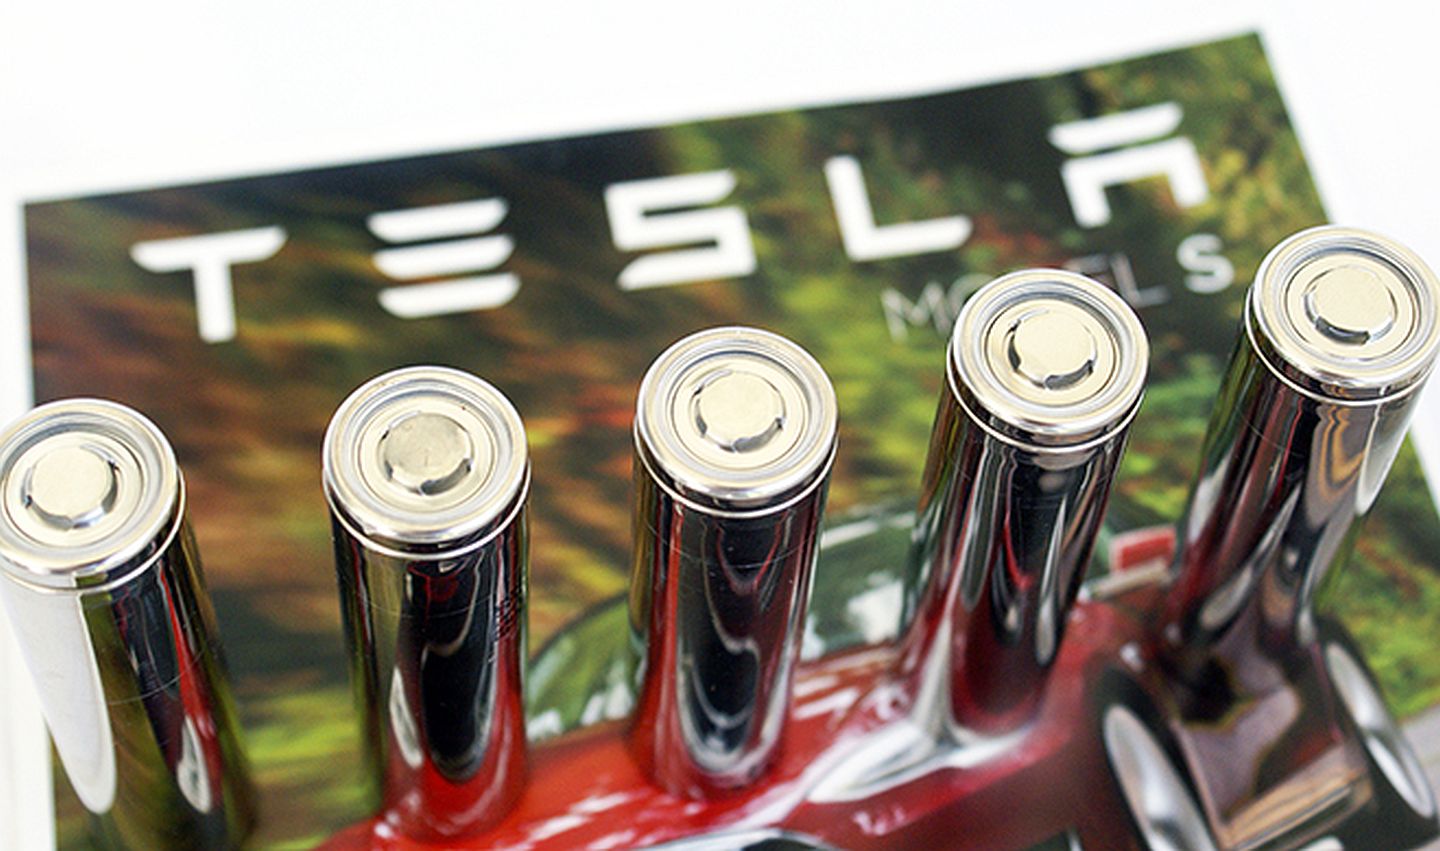 Tesla Next Generation Battery Development, in Colorado?